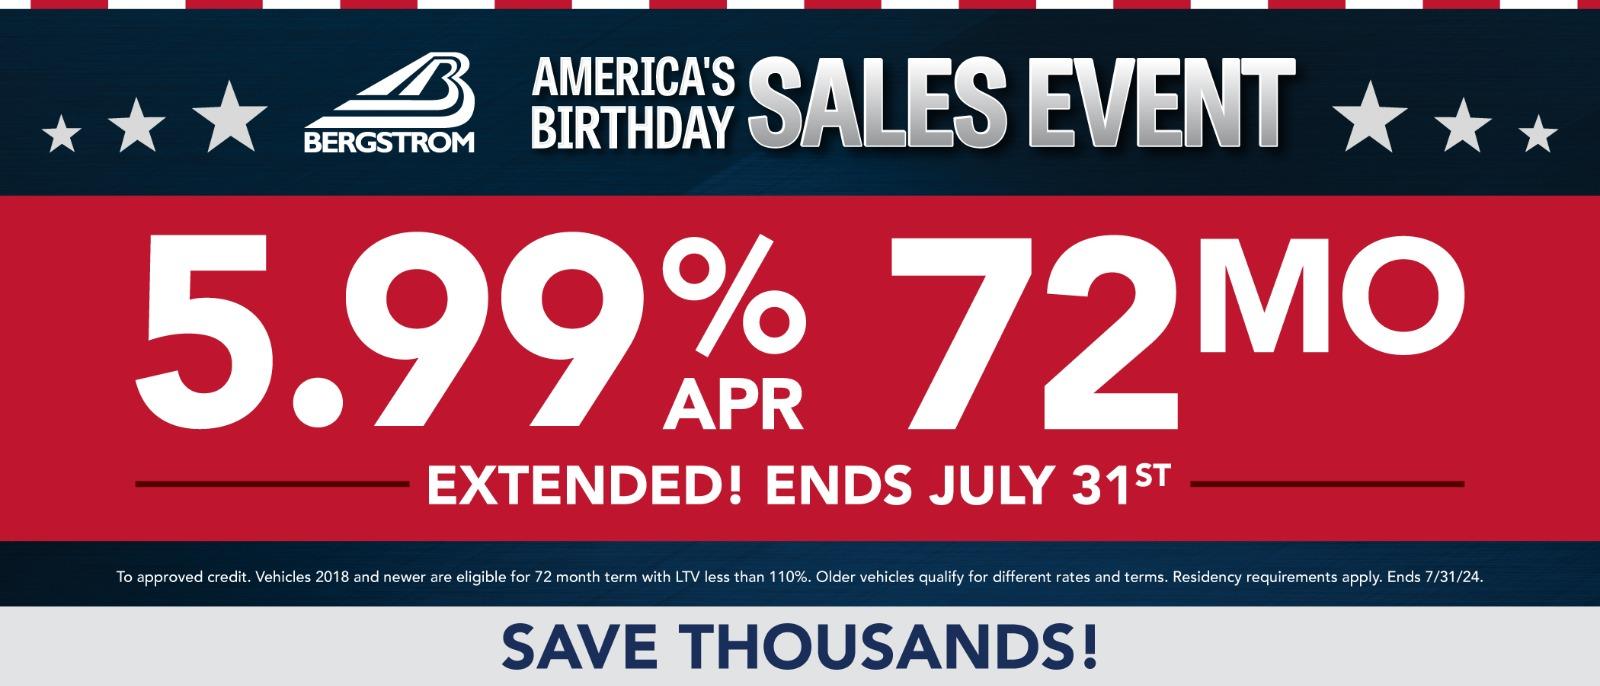 America's Birthday Sales Event